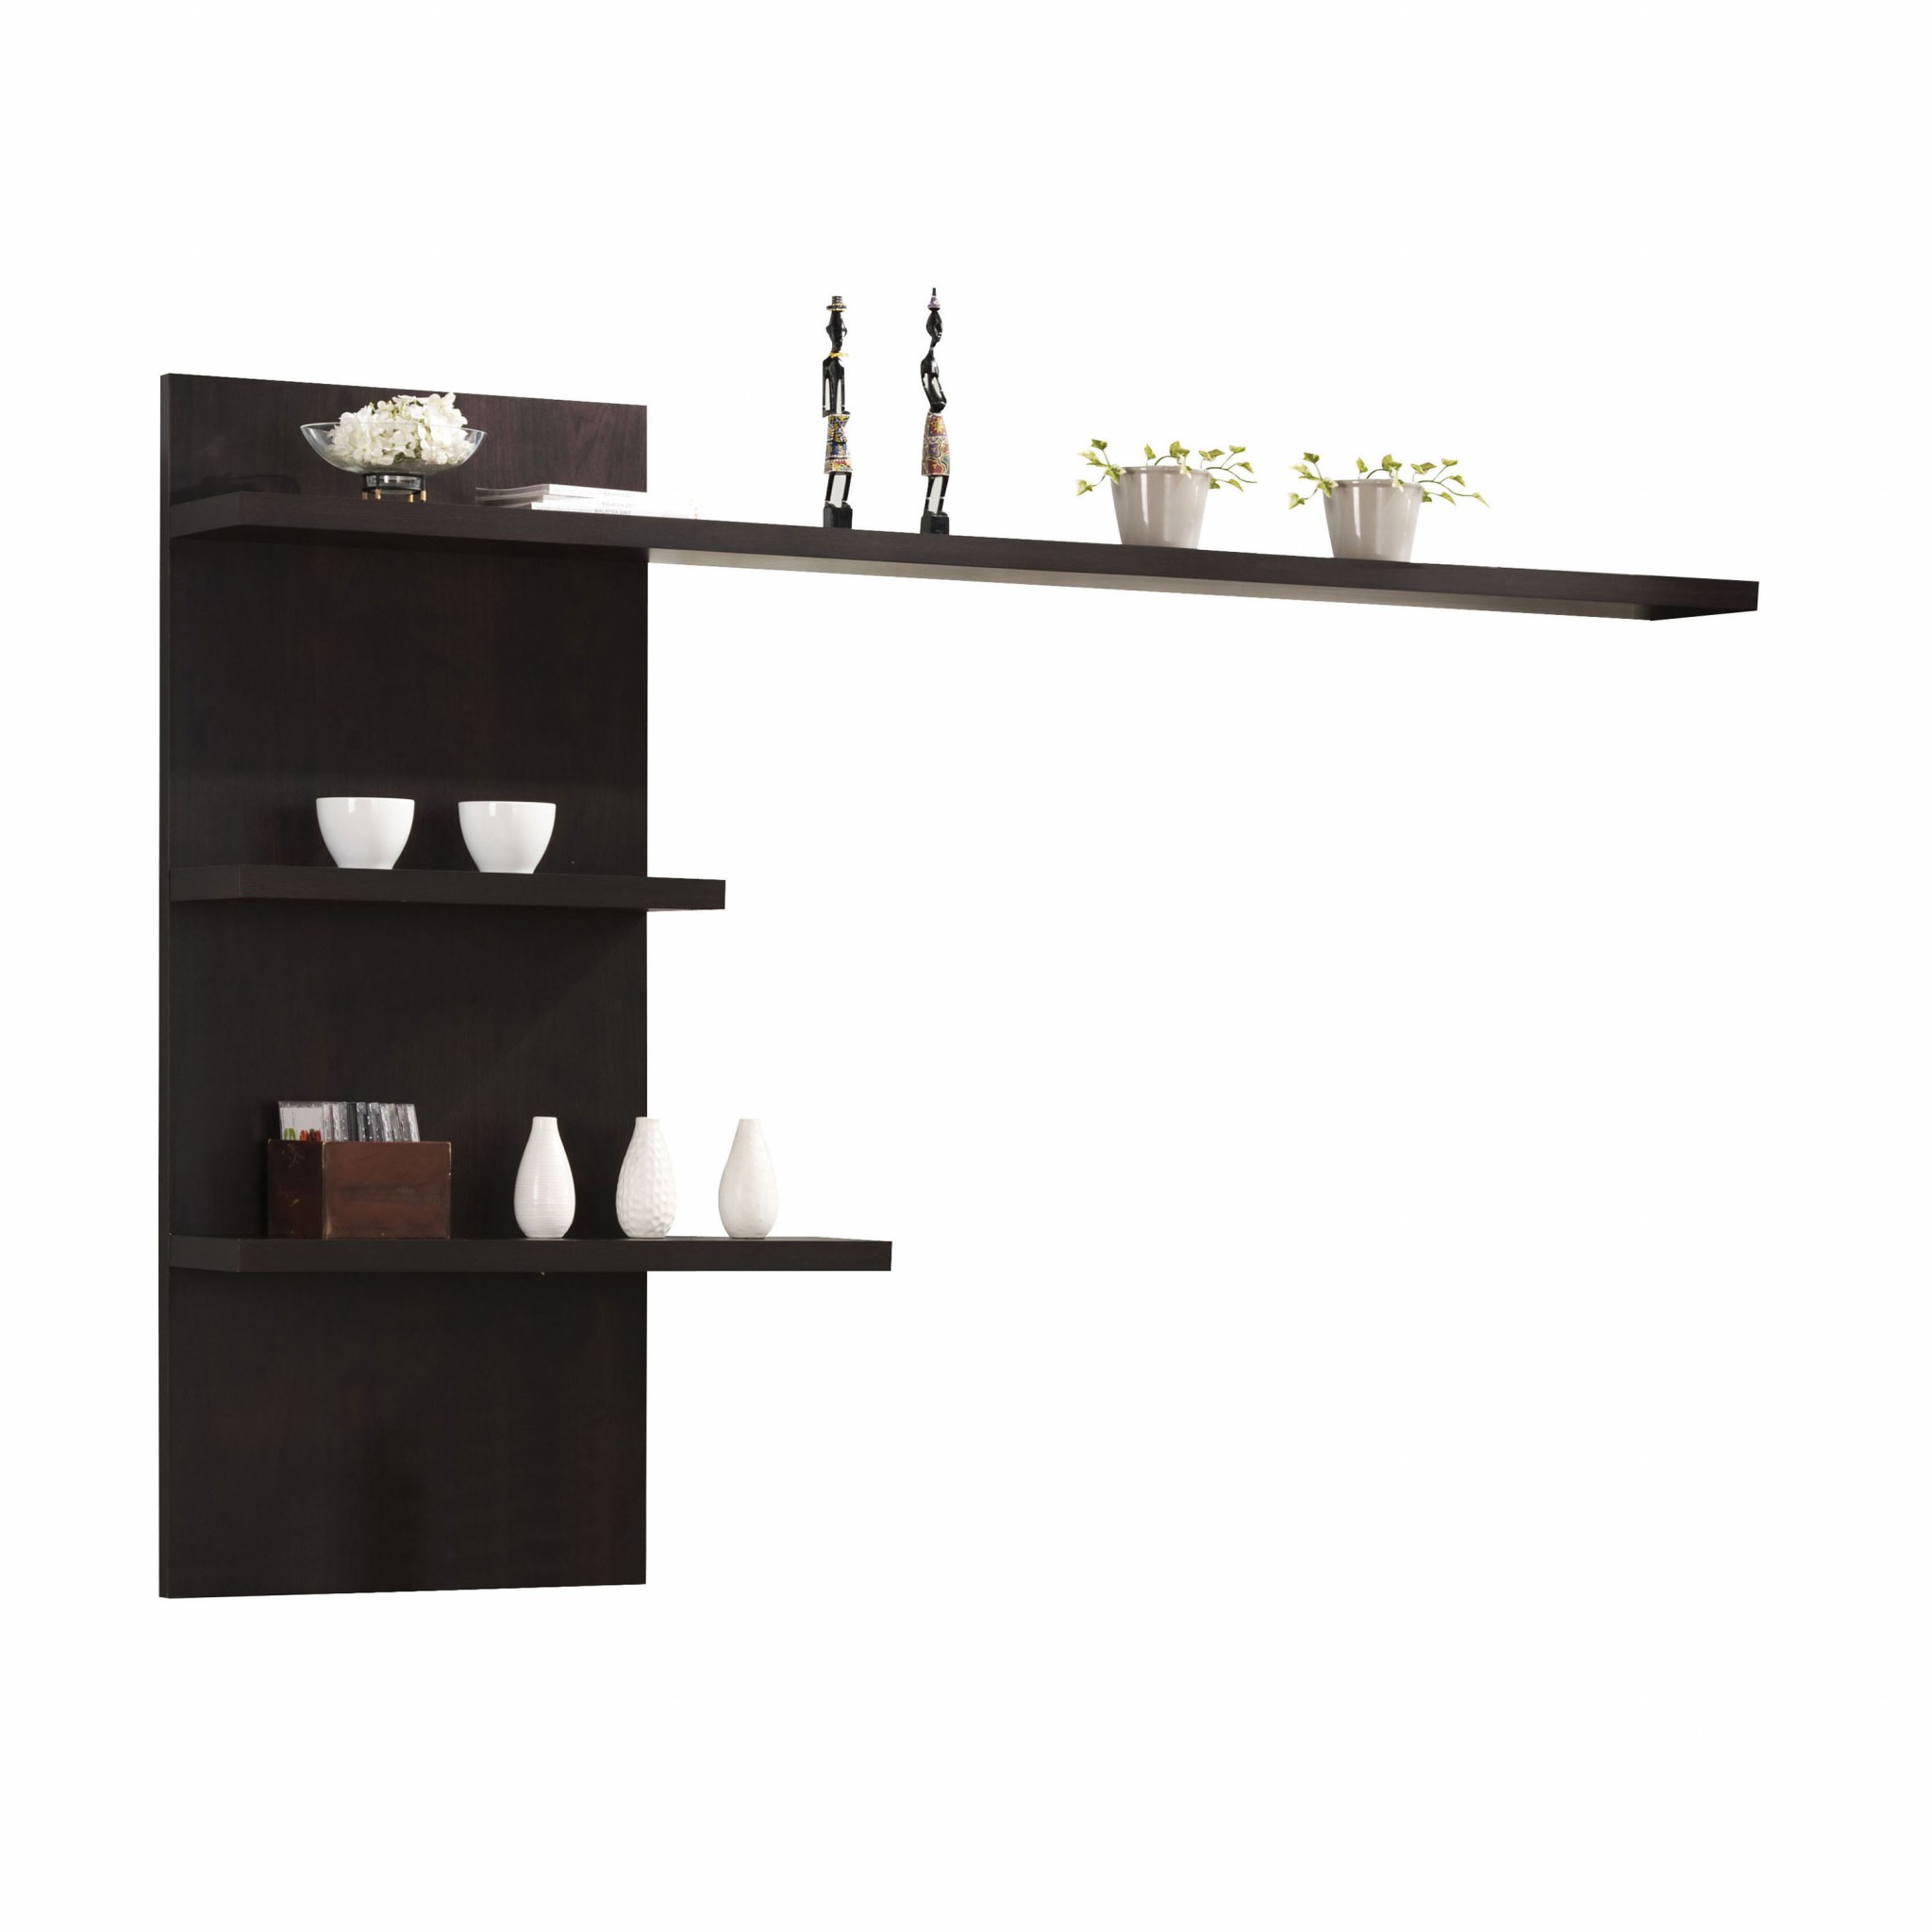 9" X 79" X 54" Espresso Wood Veneer (Paper) Wall Shelf